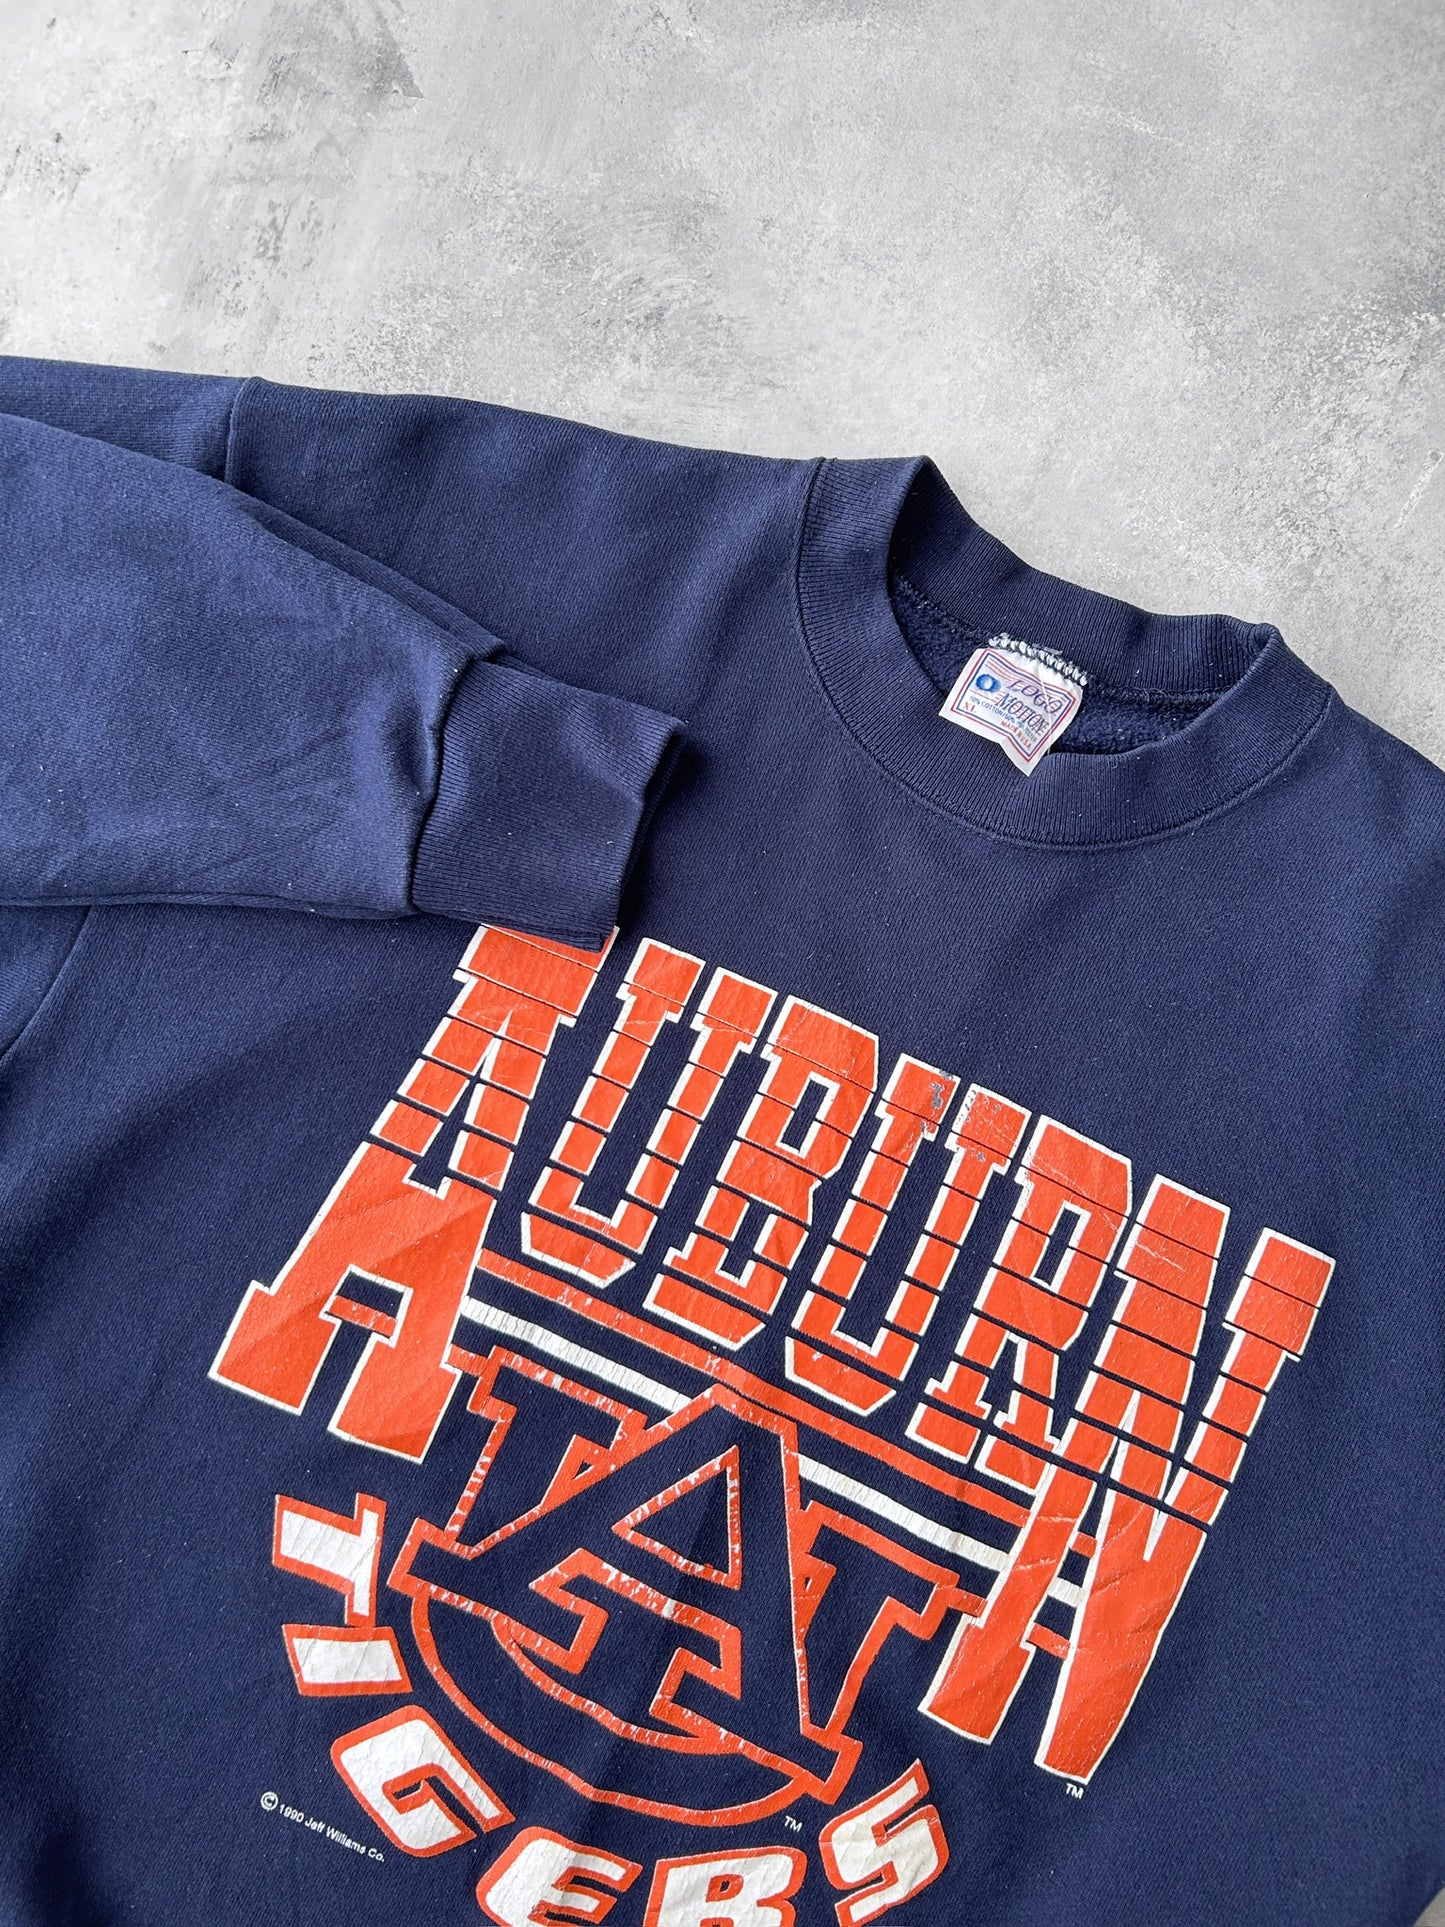 Auburn University Sweatshirt '90 - Large